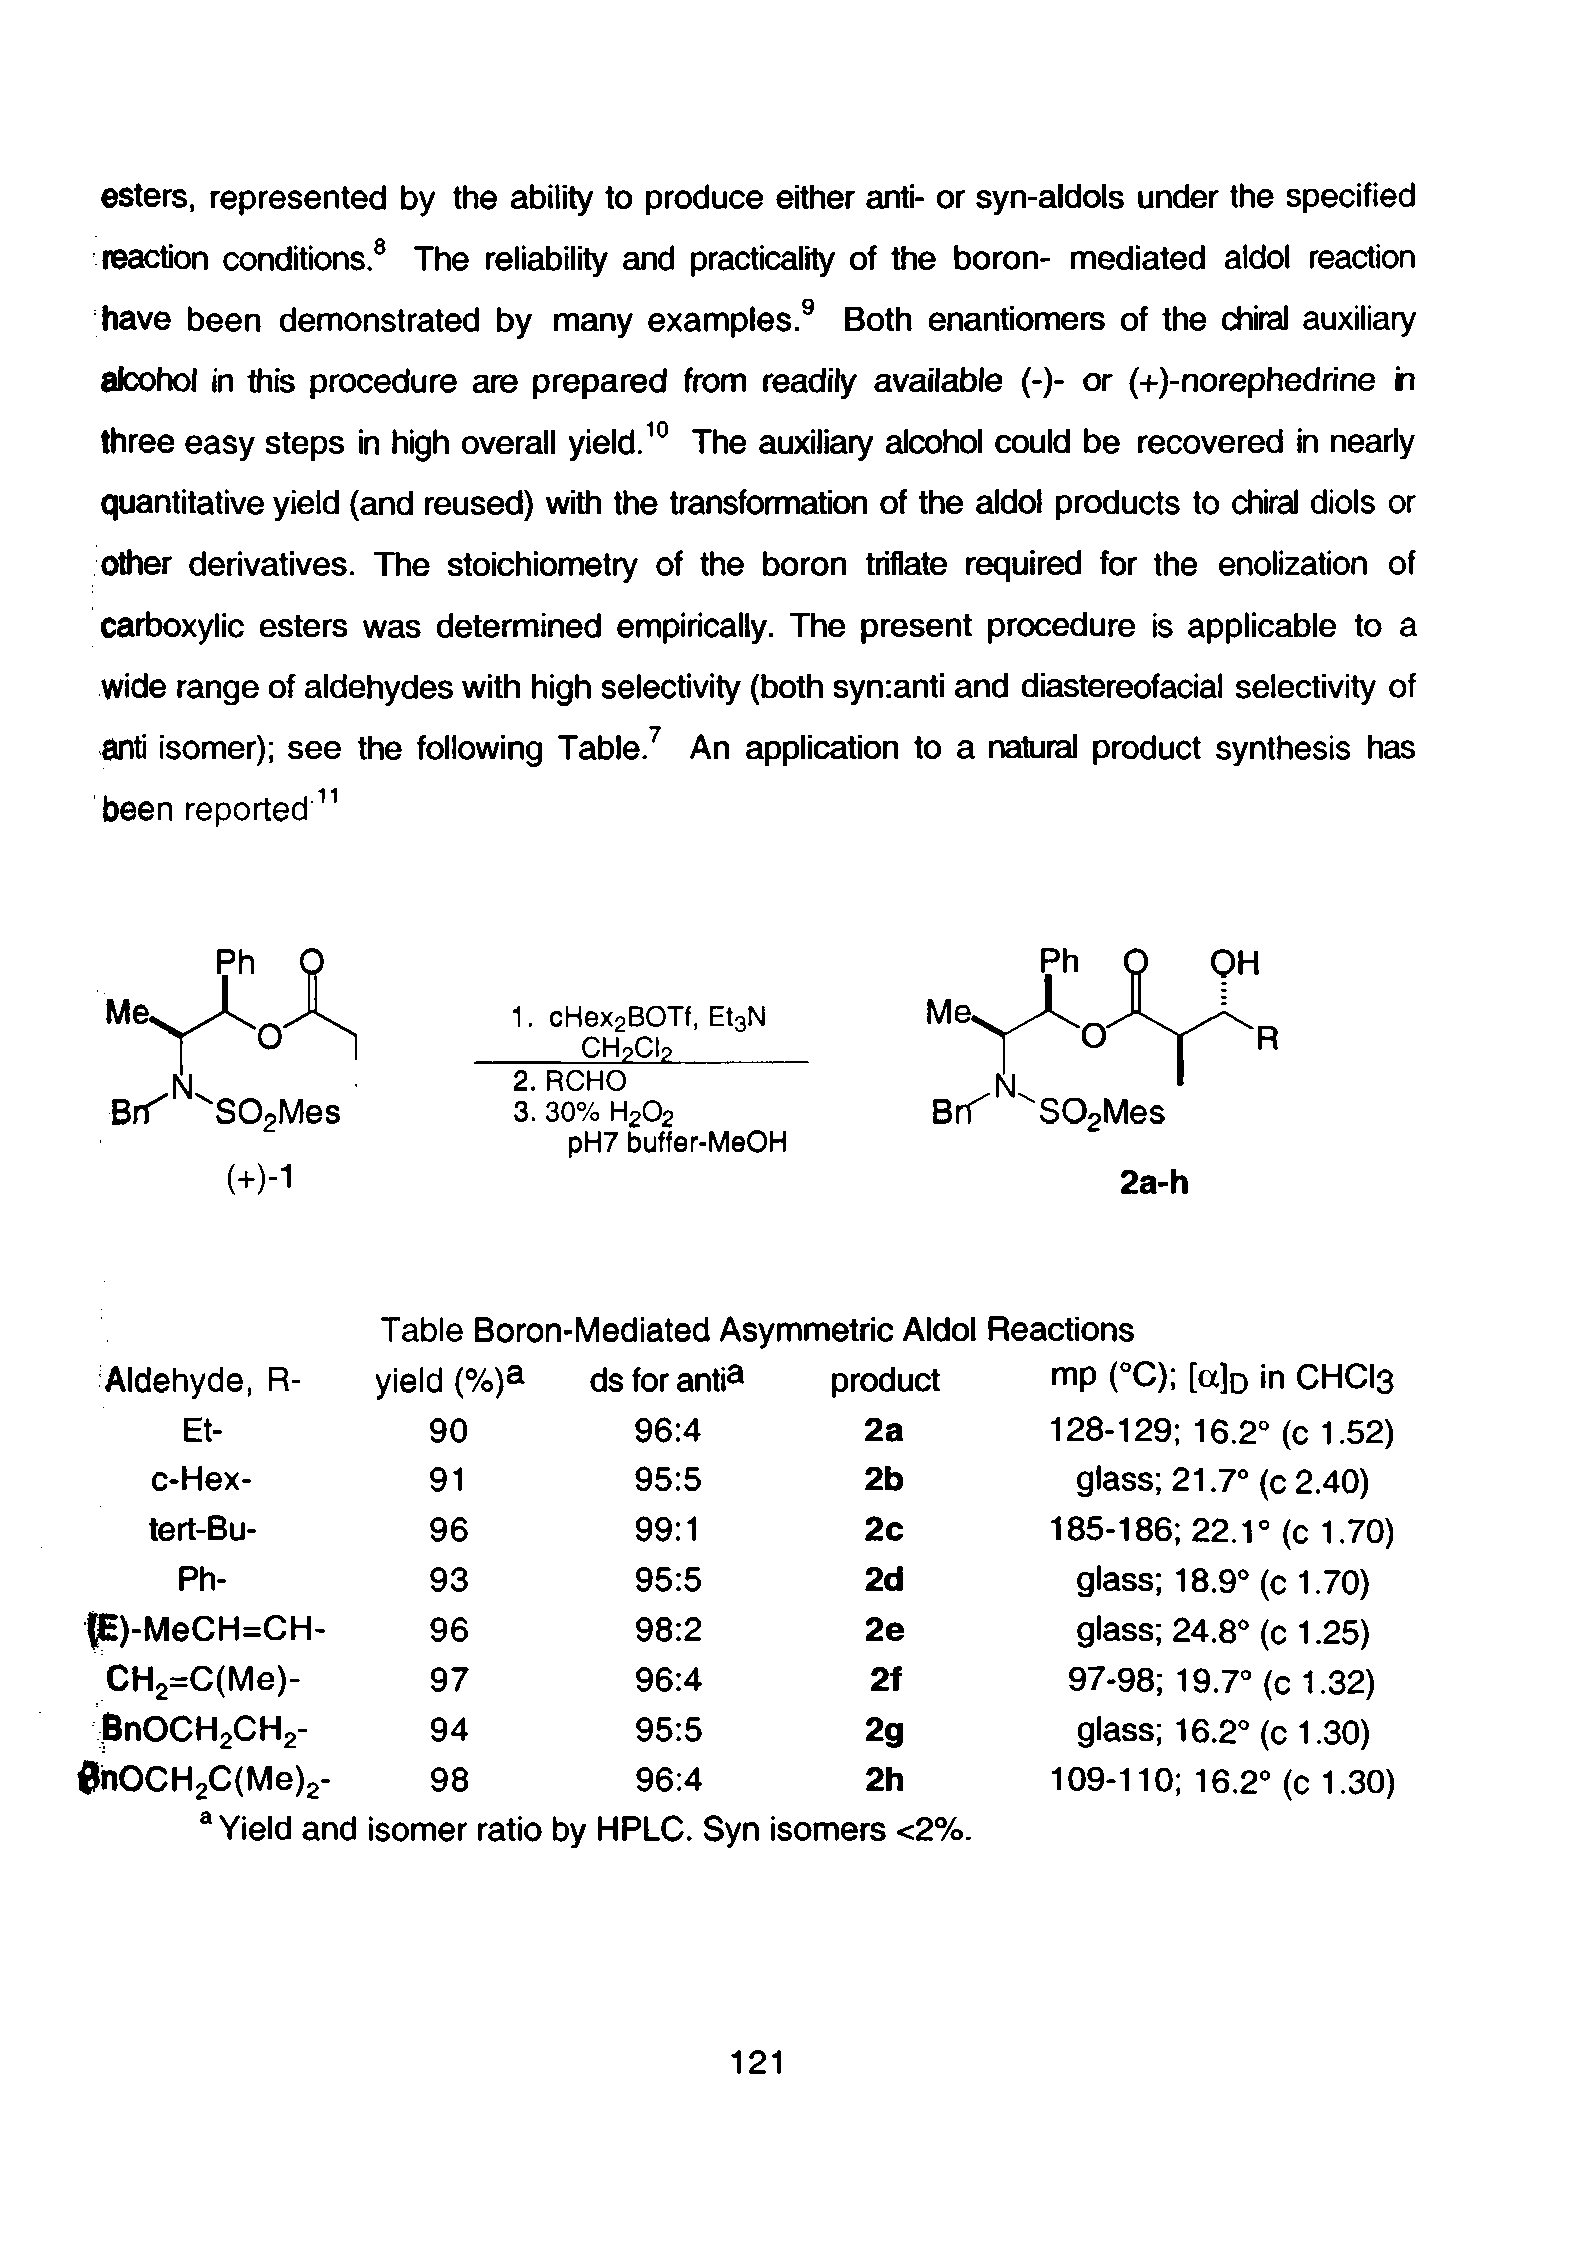 Table Boron-Mediated Asymmetric Aldol Reactions...